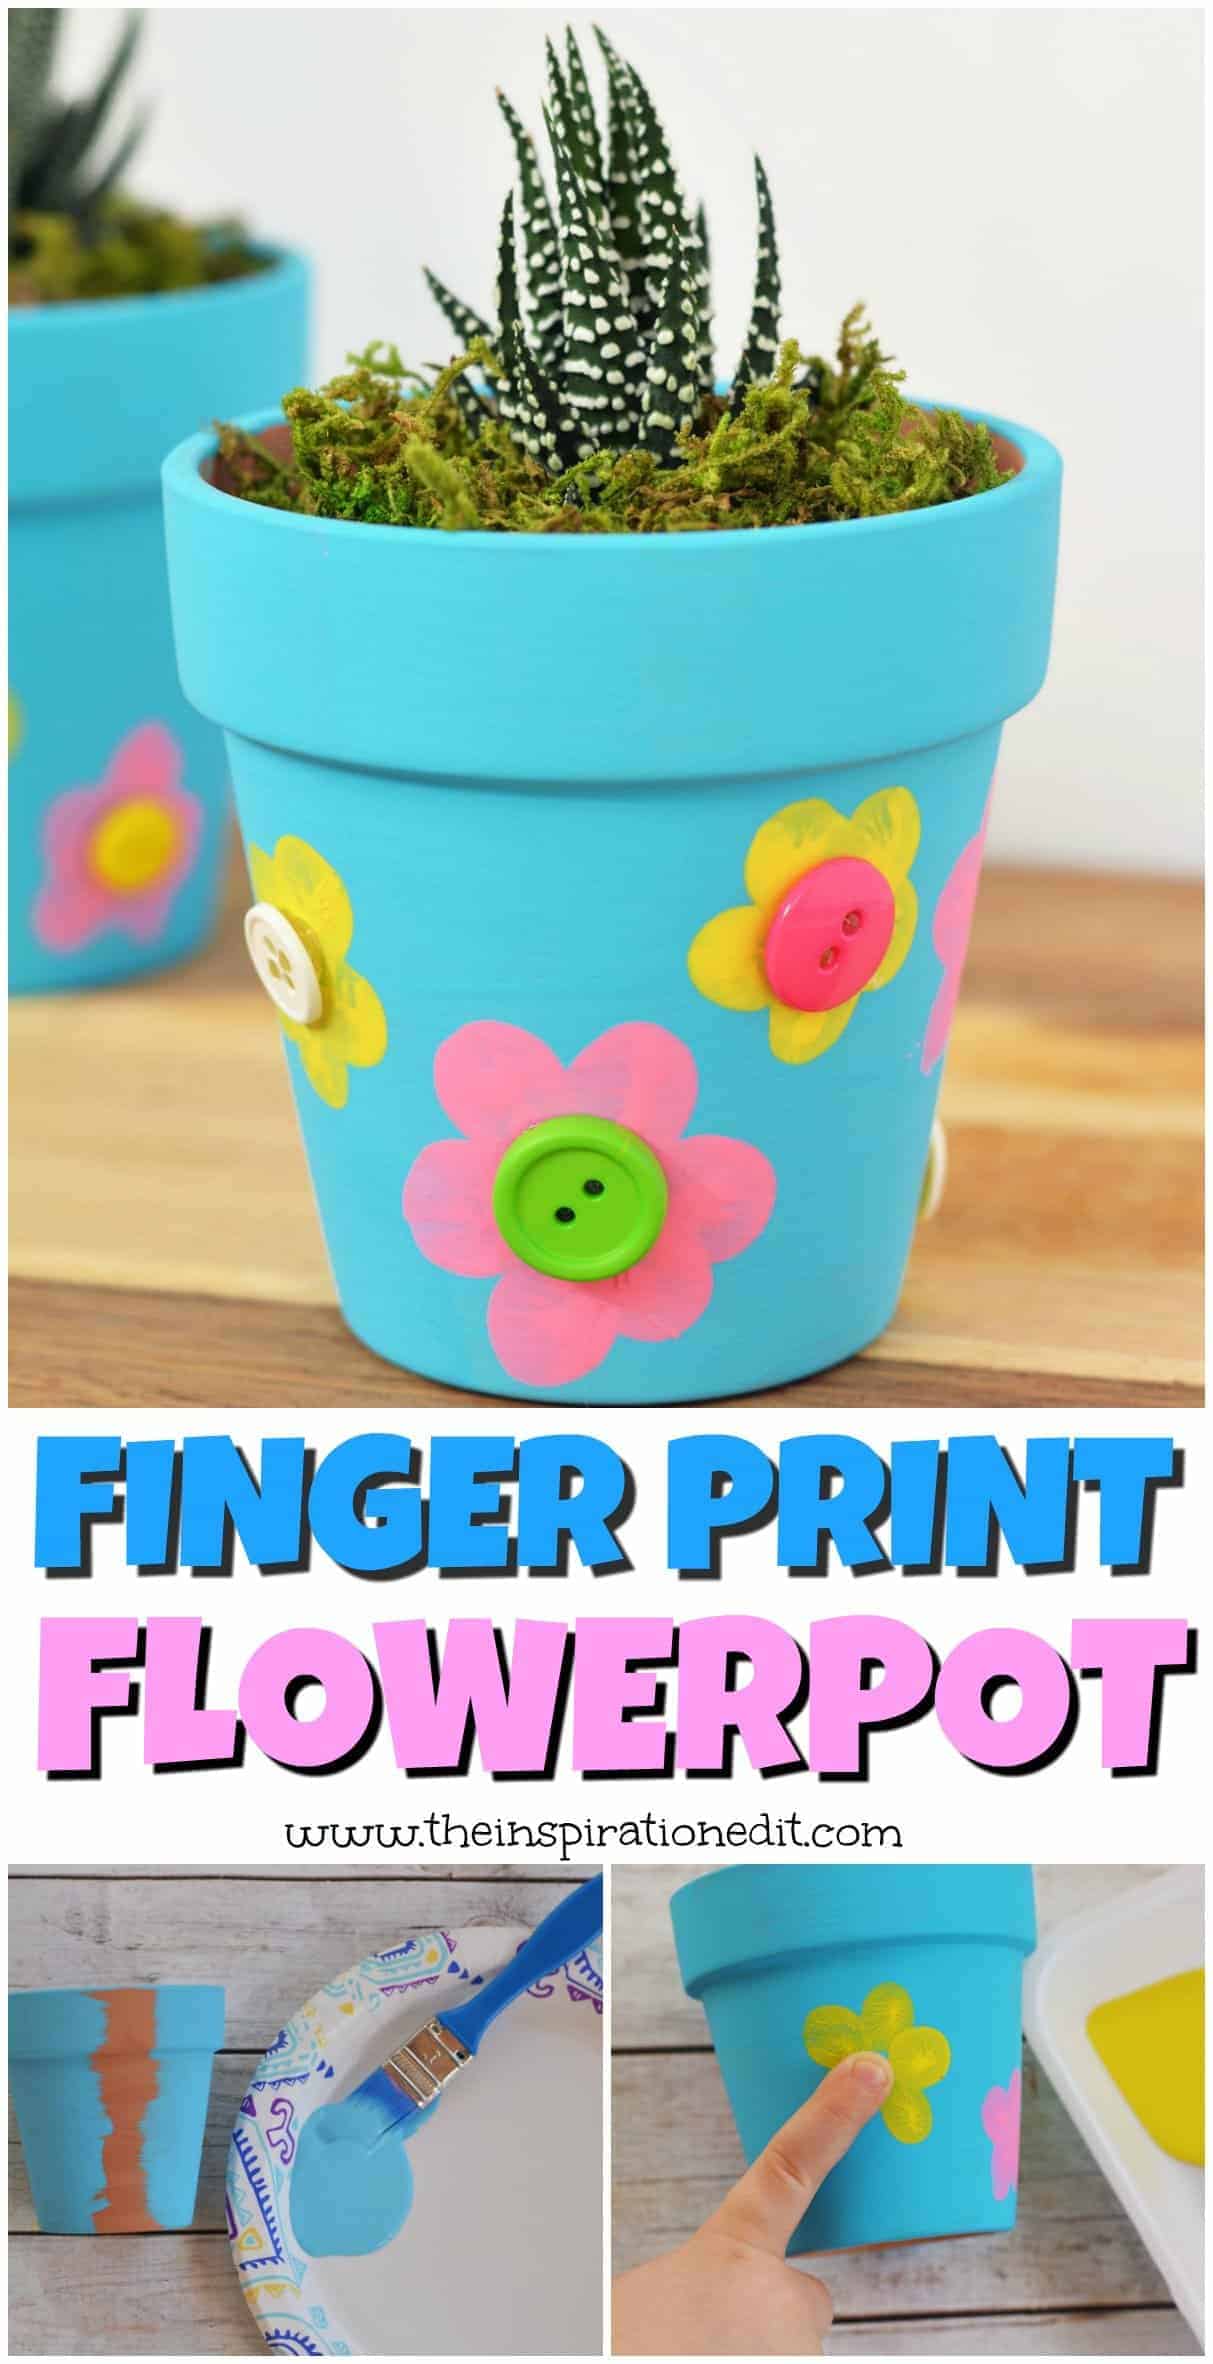 mother's day flower pot craft ideas